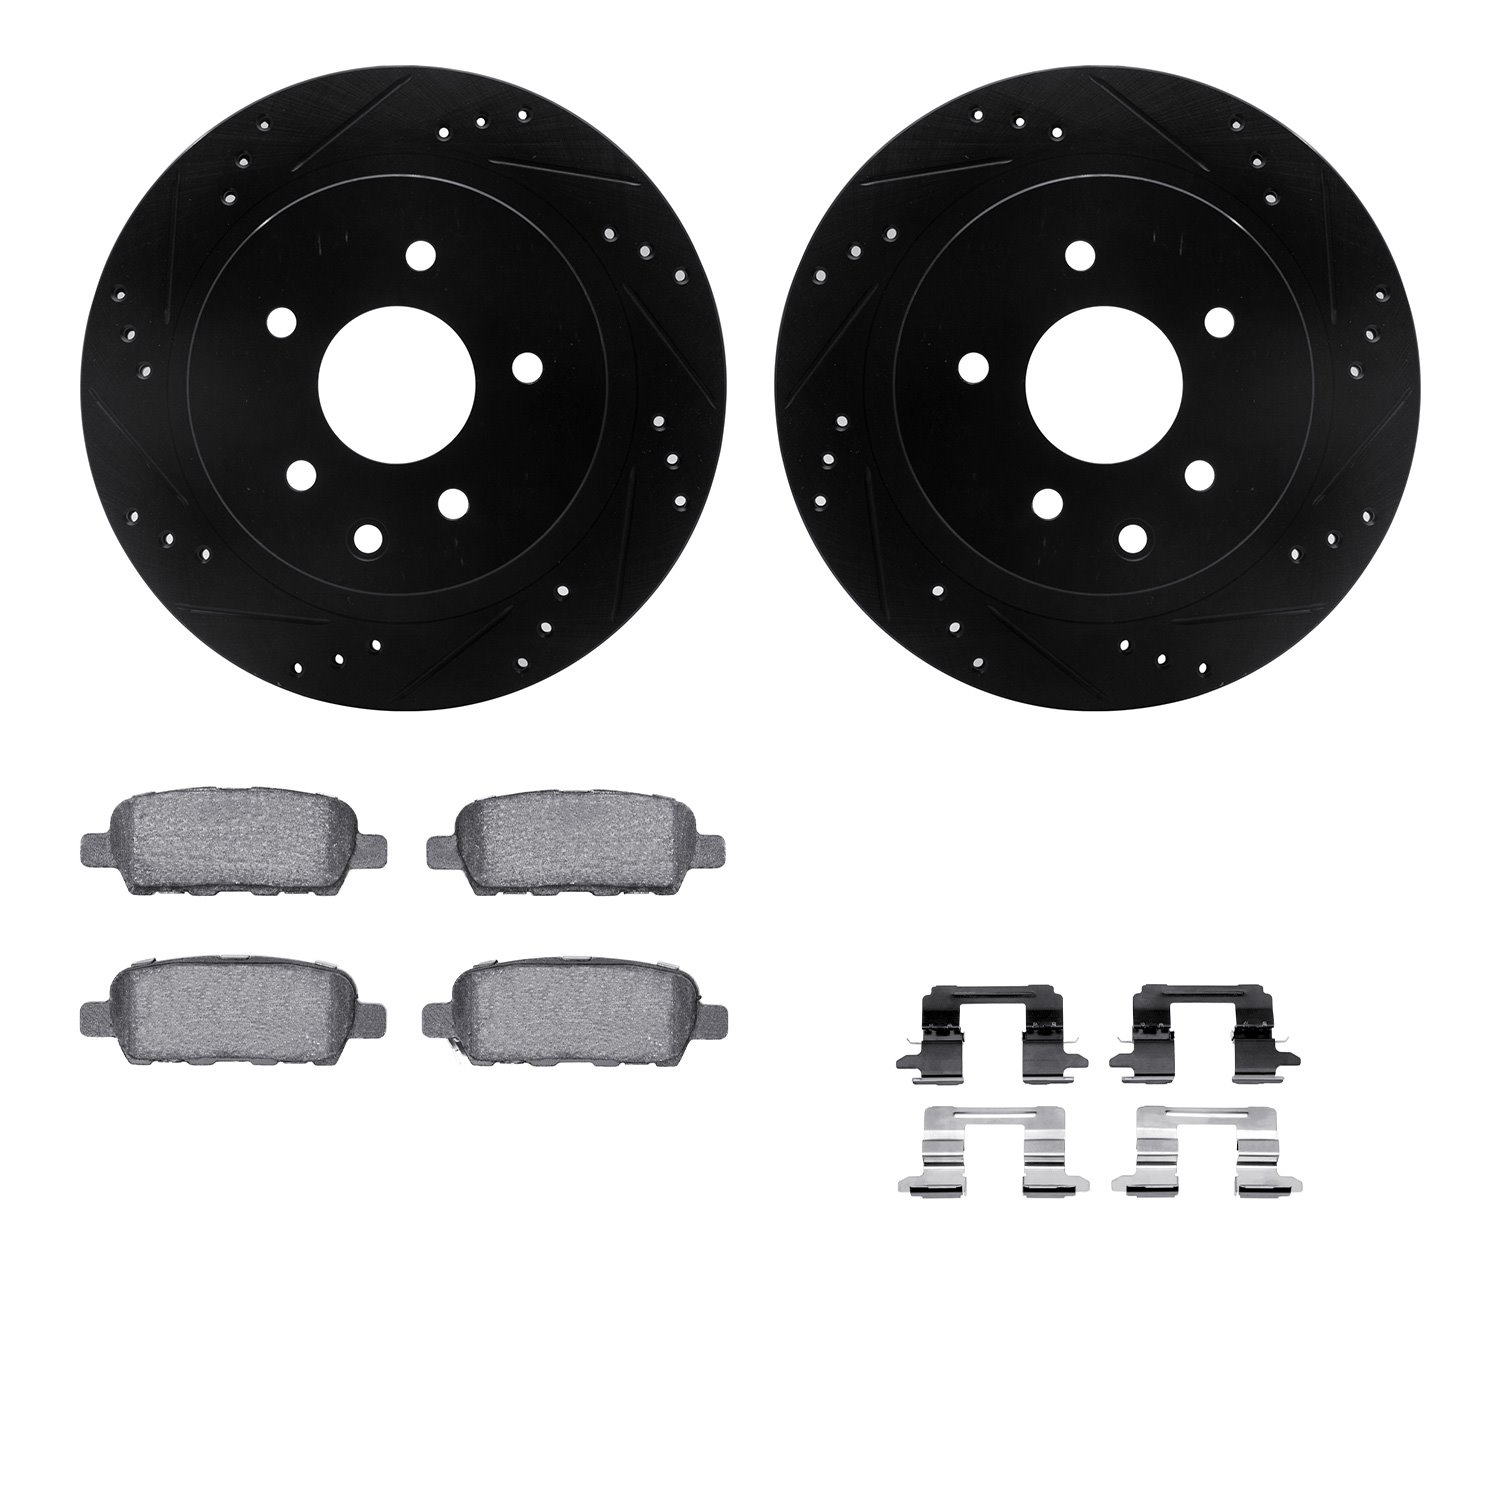 8312-67101 Drilled/Slotted Brake Rotors with 3000-Series Ceramic Brake Pads Kit & Hardware [Black], Fits Select Multiple Makes/M